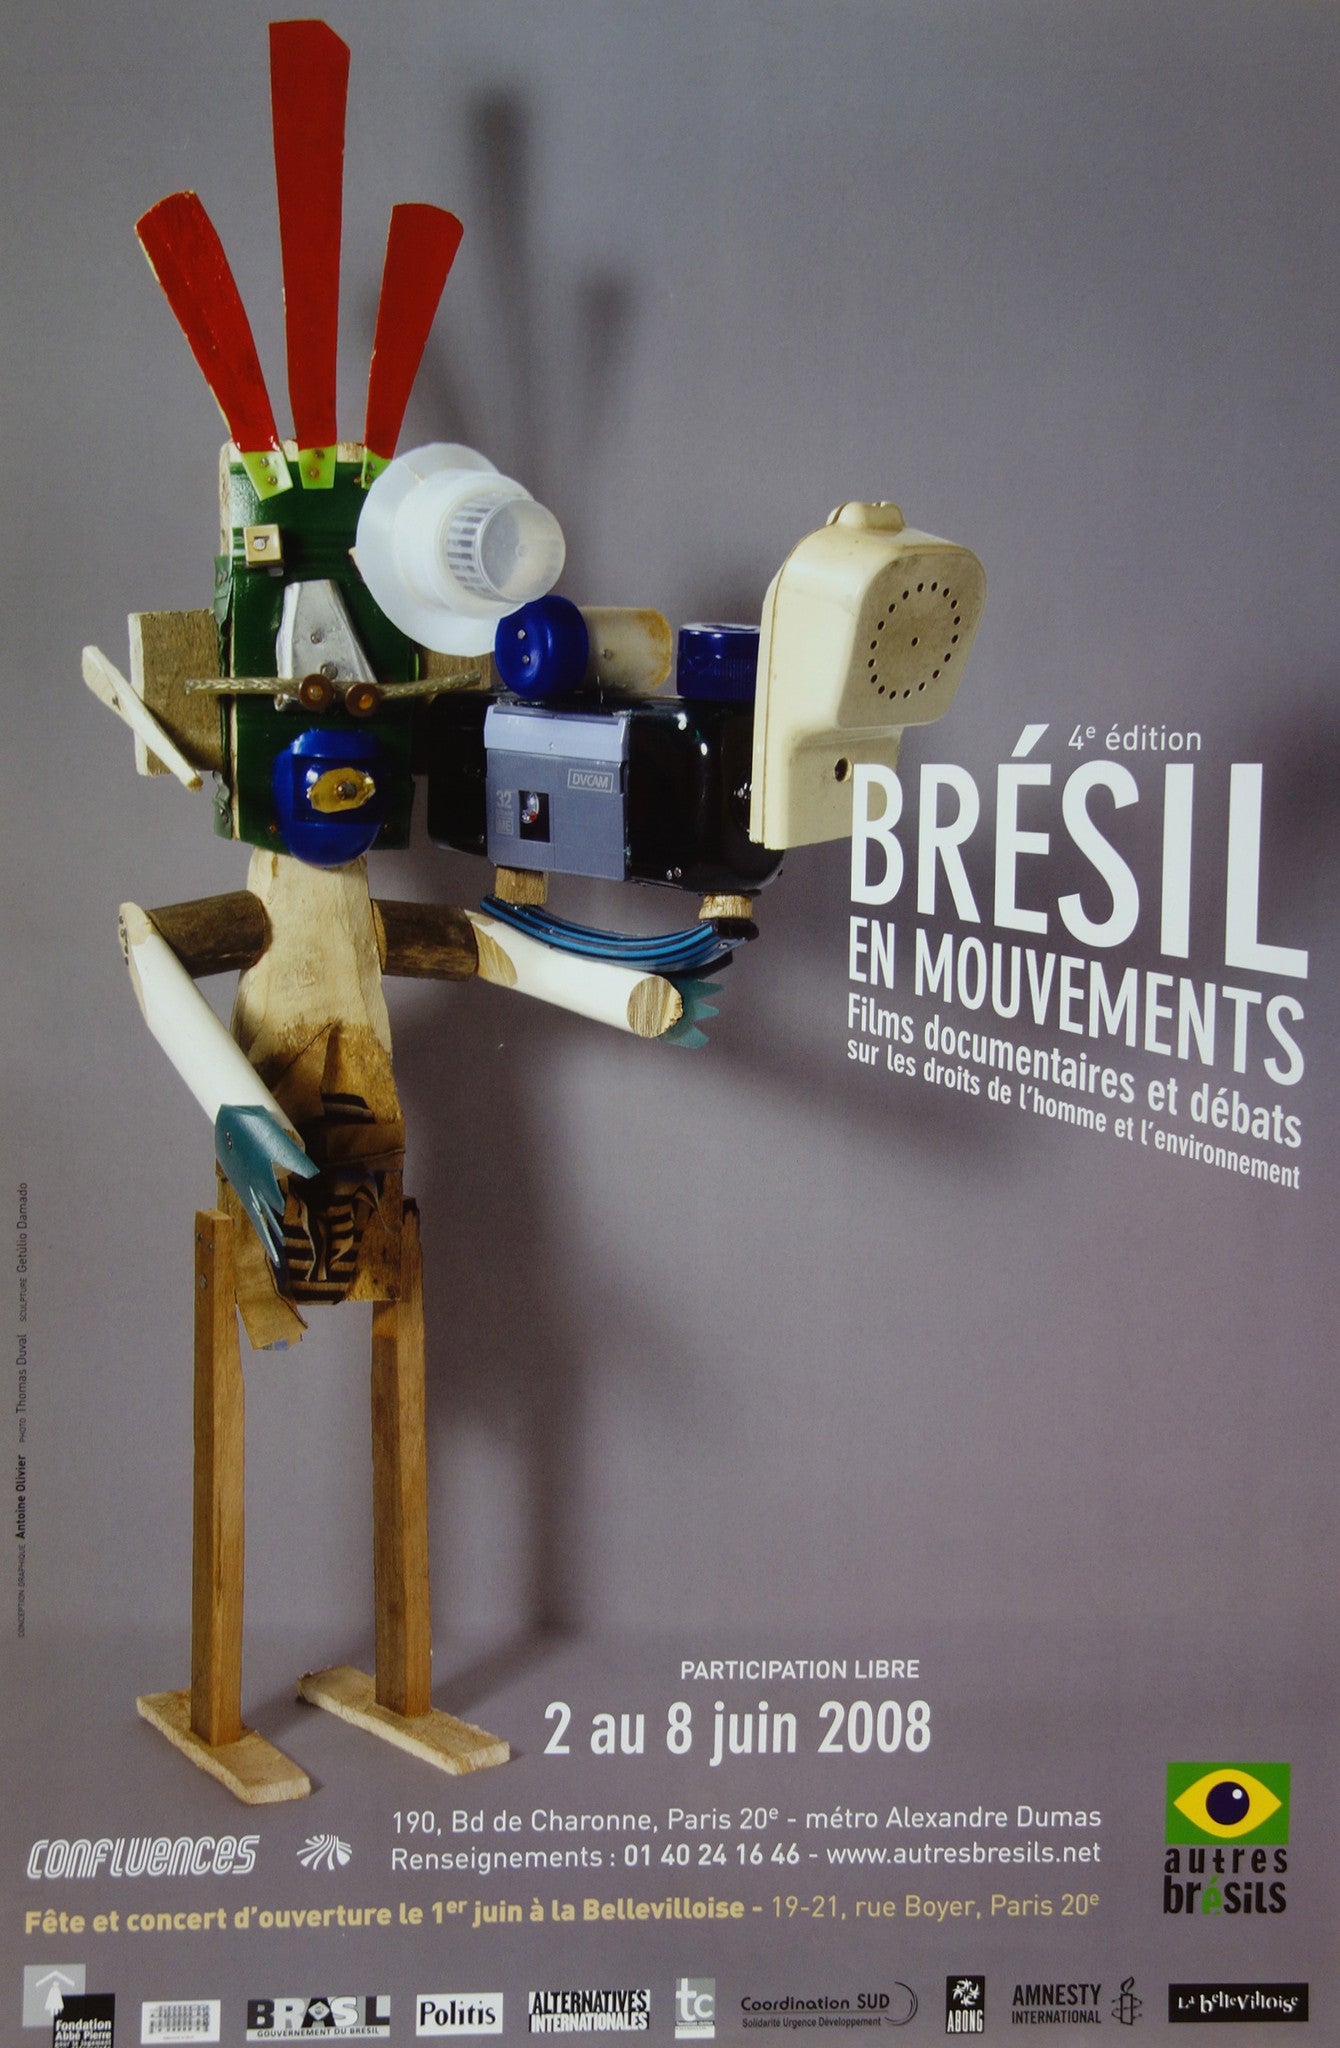 Brazil In Movement